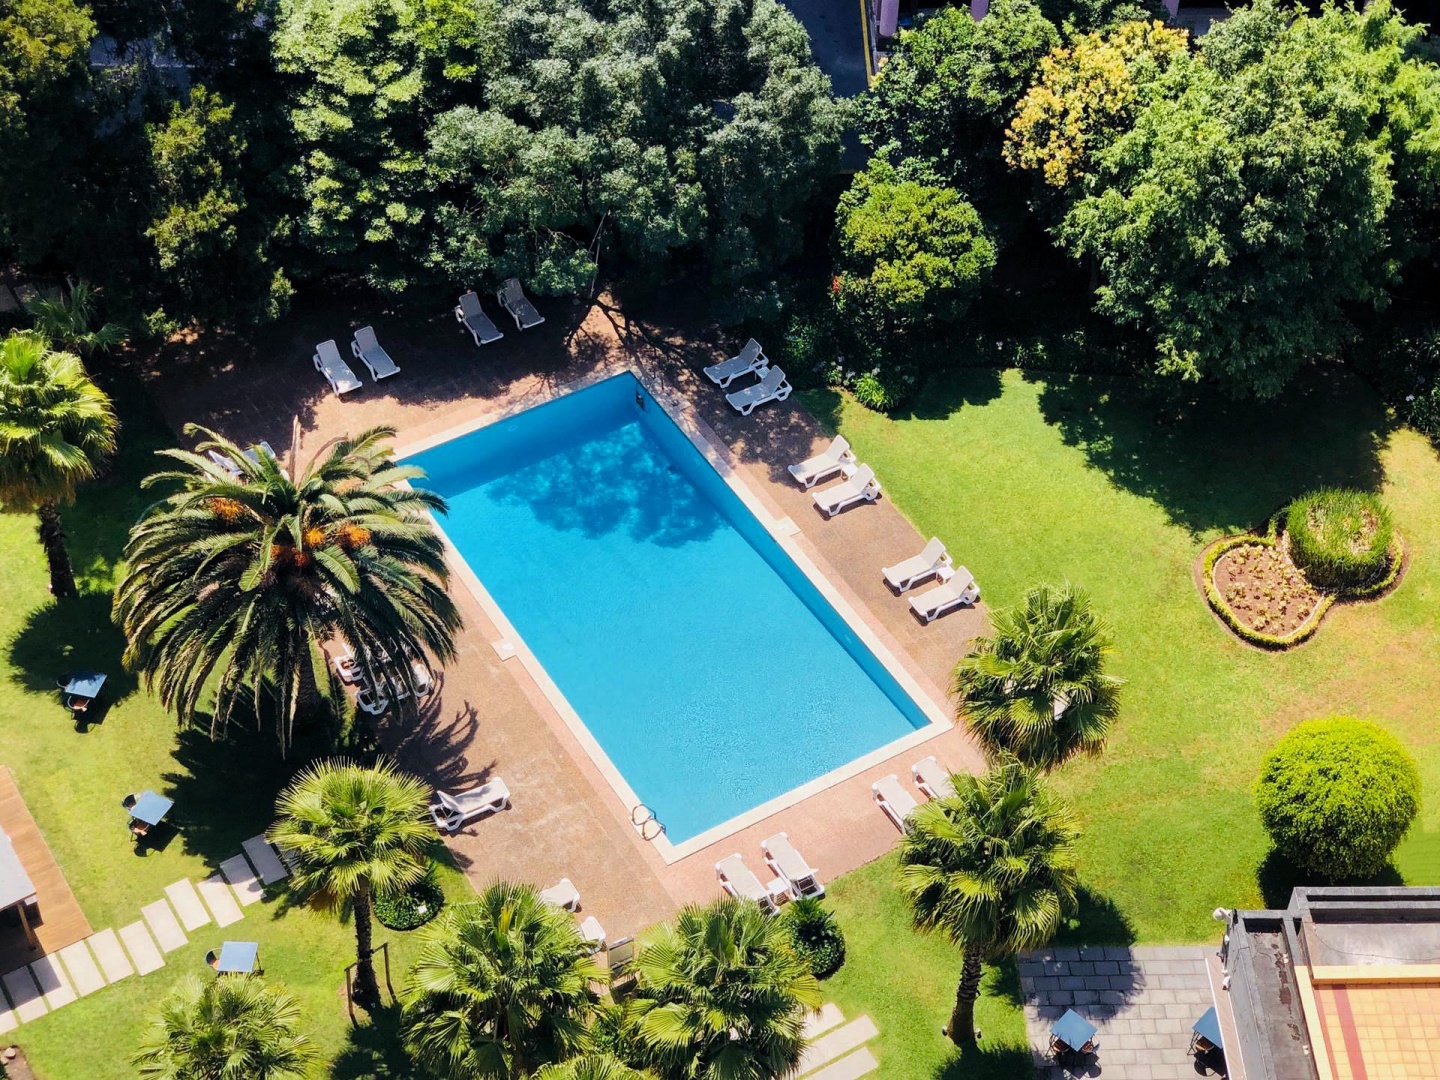 Desfrute de um "pool brunch", em Lisboa